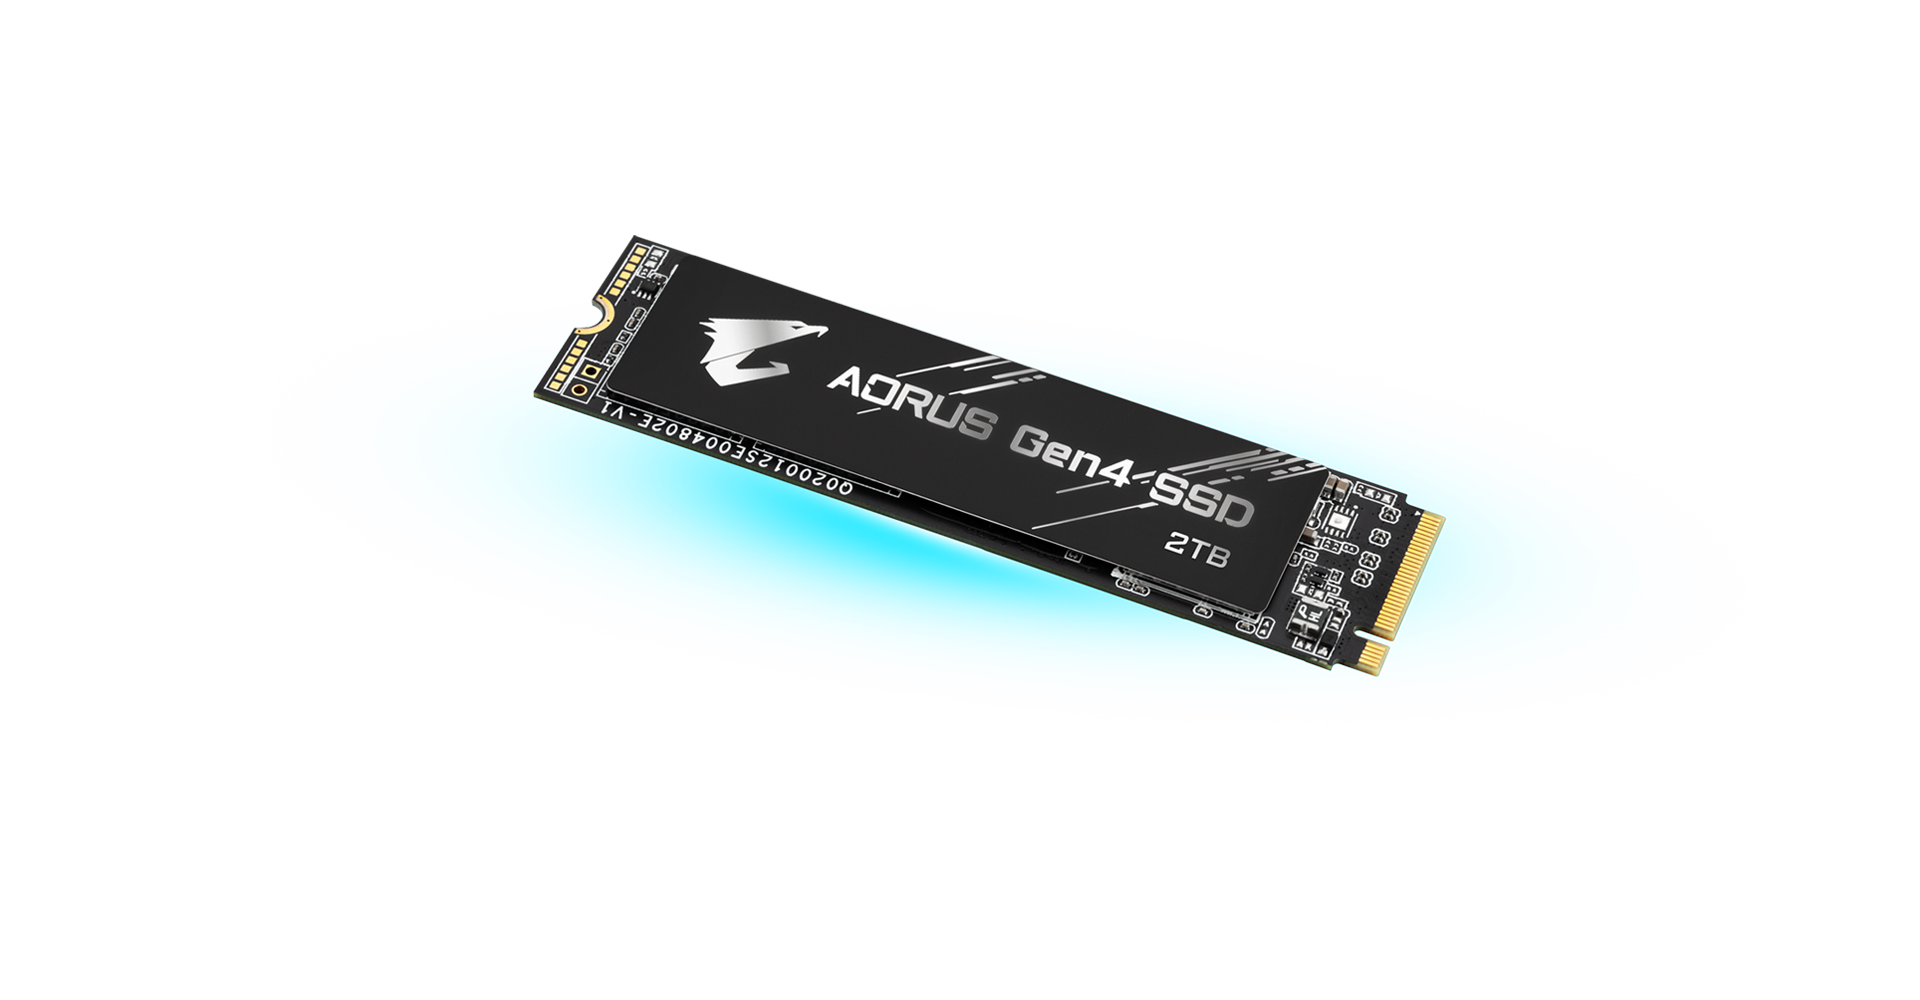 AORUS Gen4 SSD 2TB Key Features